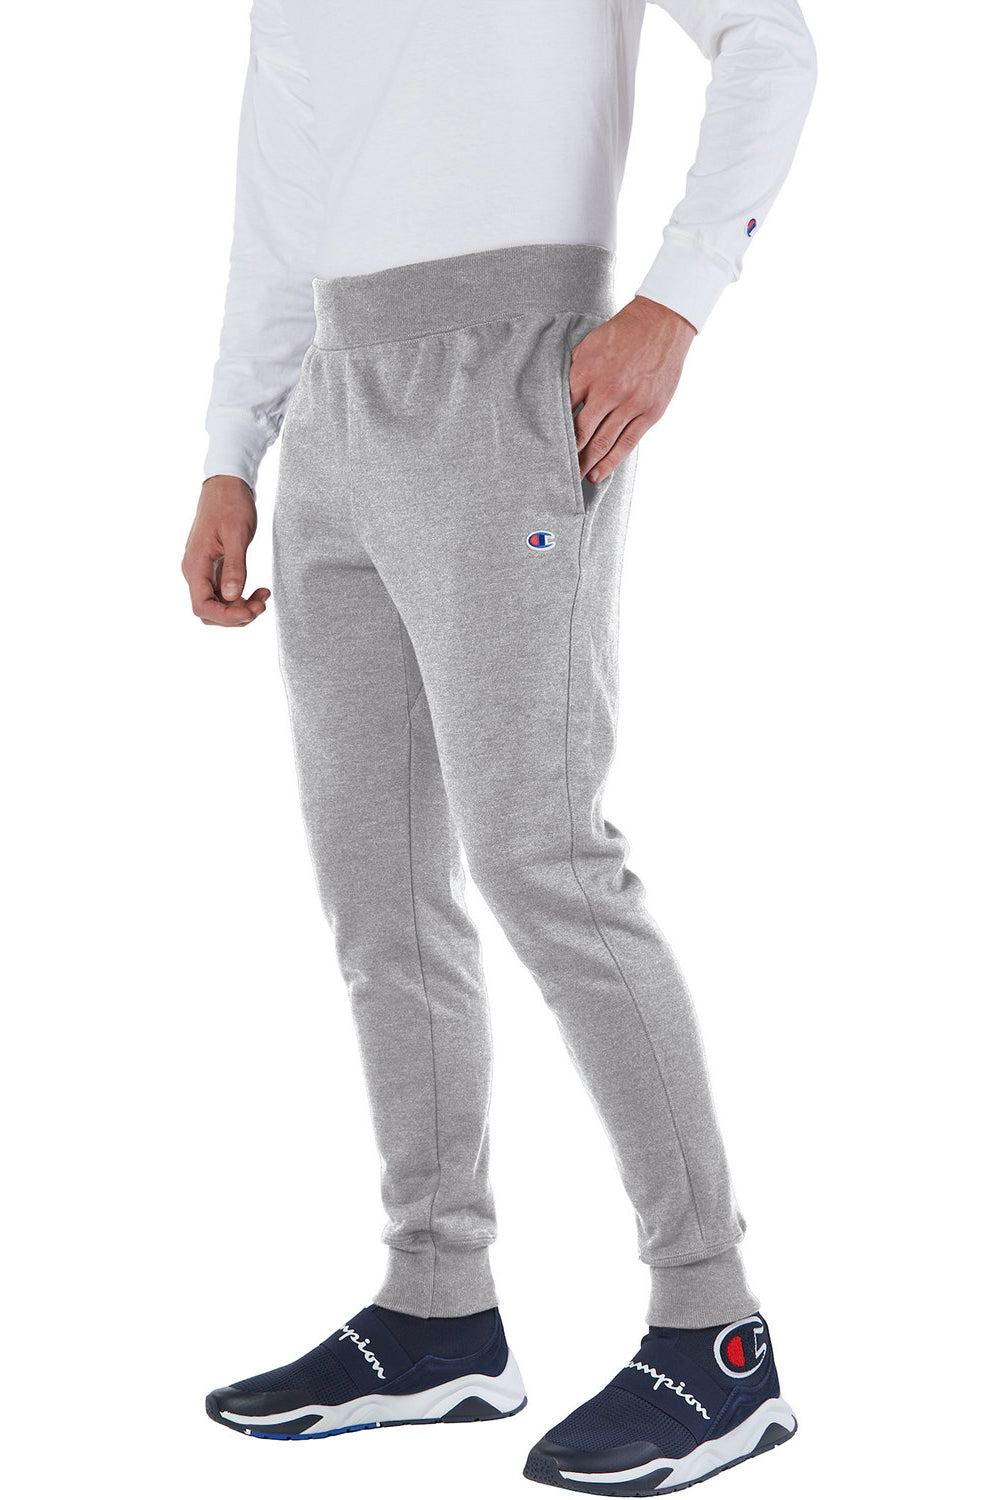 Champion RW25 Mens Reverse Weave Fleece Jogger Sweatpants w/ Pockets Oxford Grey 3Q